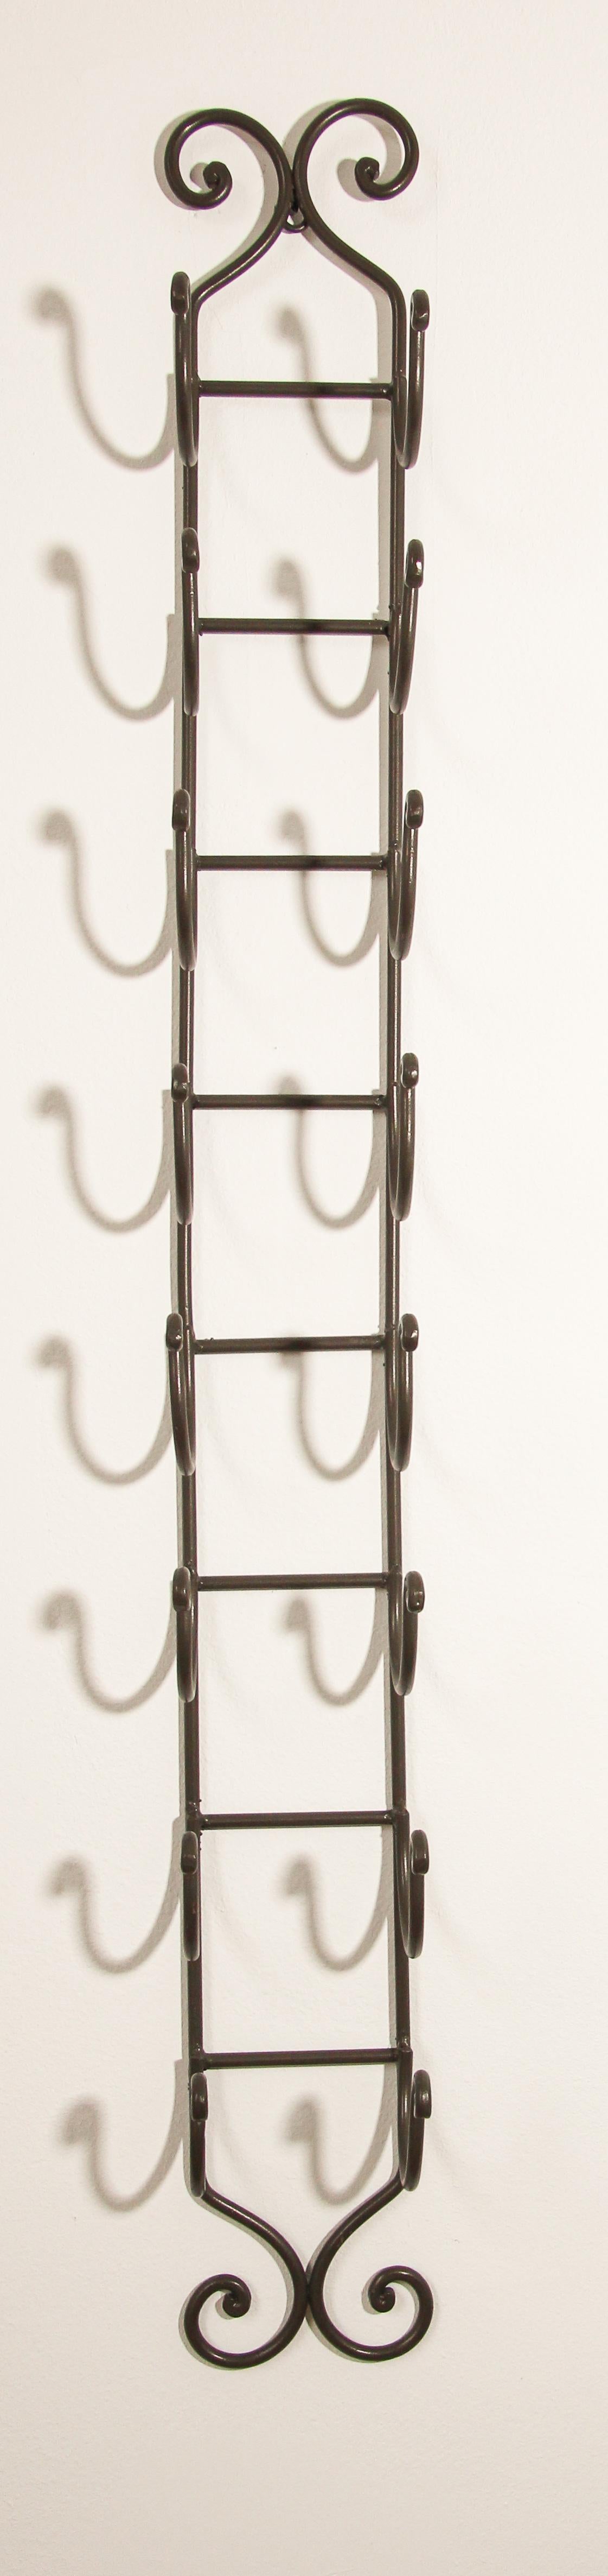 wrought iron wall mounted wine rack